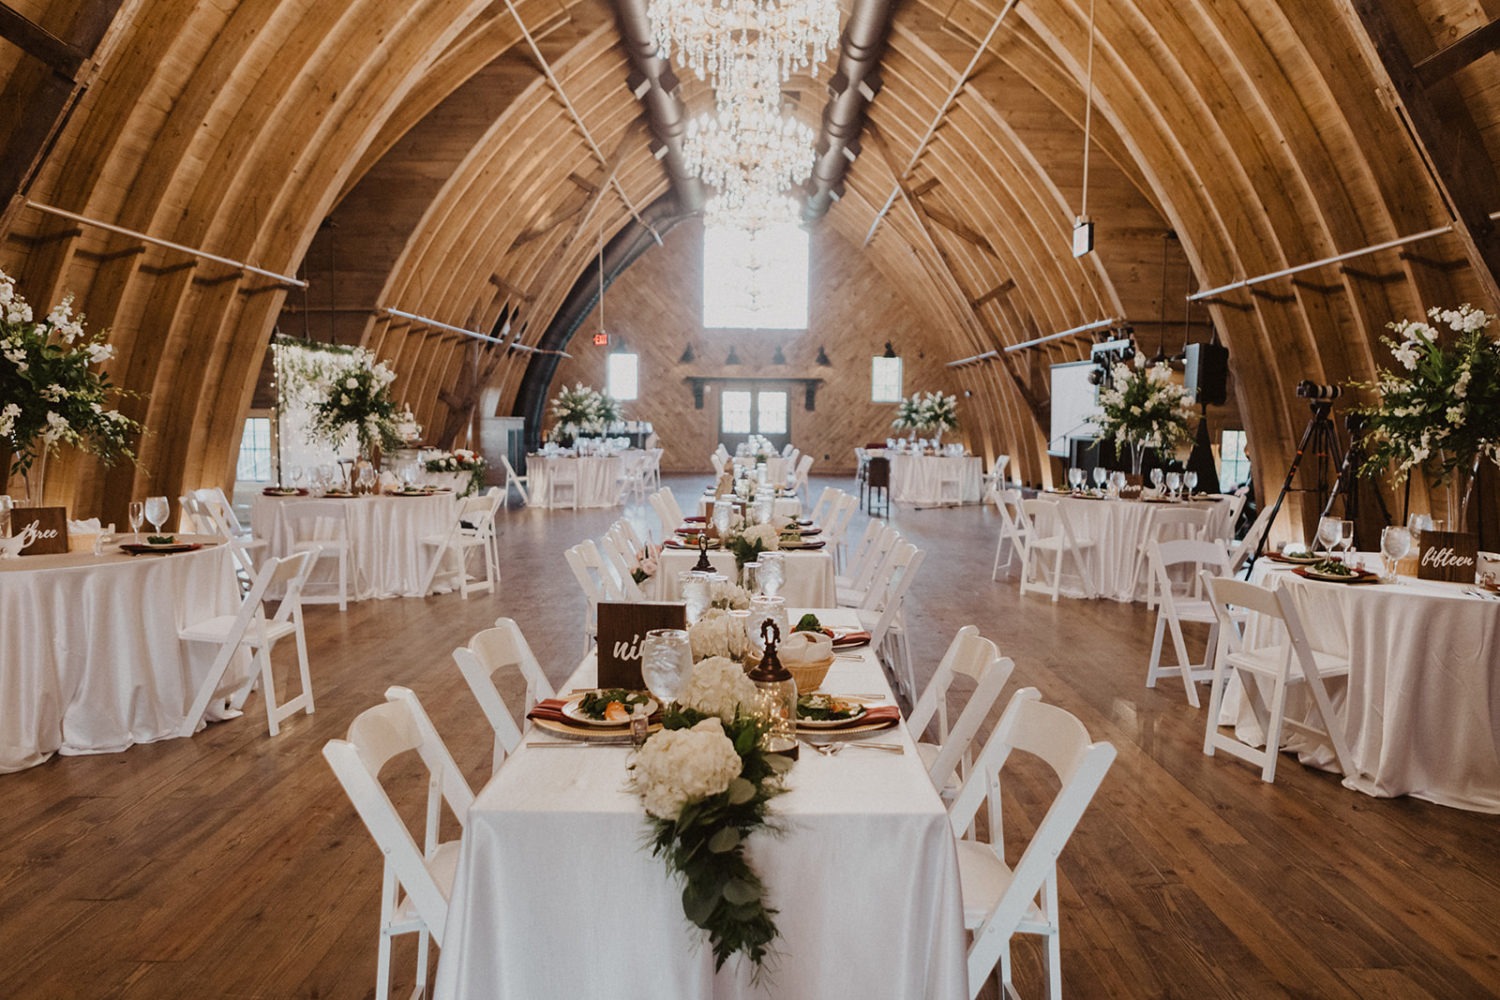 Reception table setting and decor at Virginia barn wedding